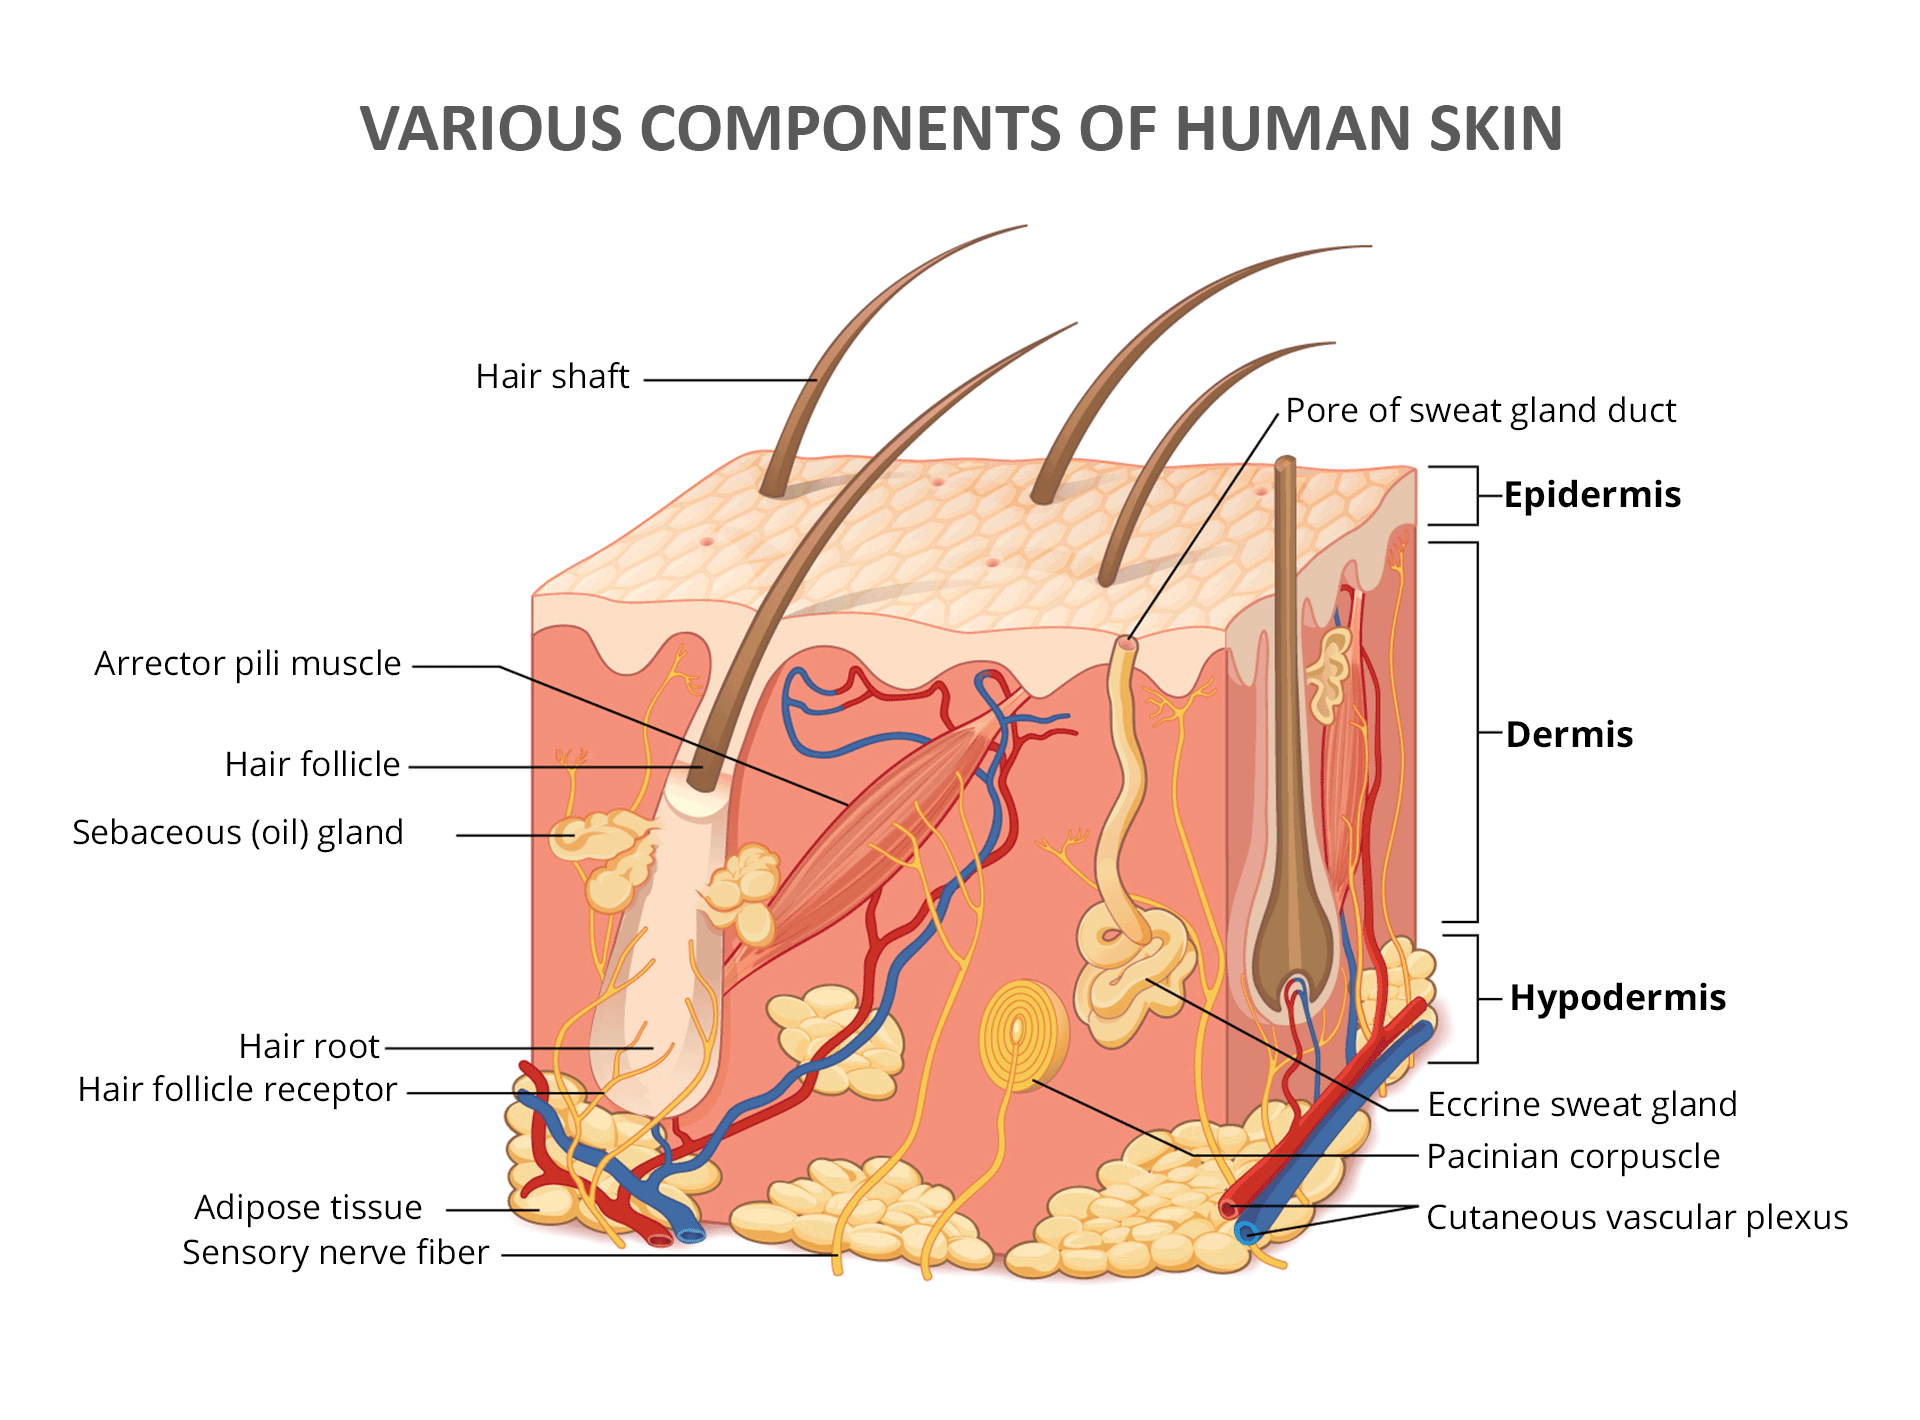 The Structure of Human Skin - Epidermis, Dermis, Hypodermis